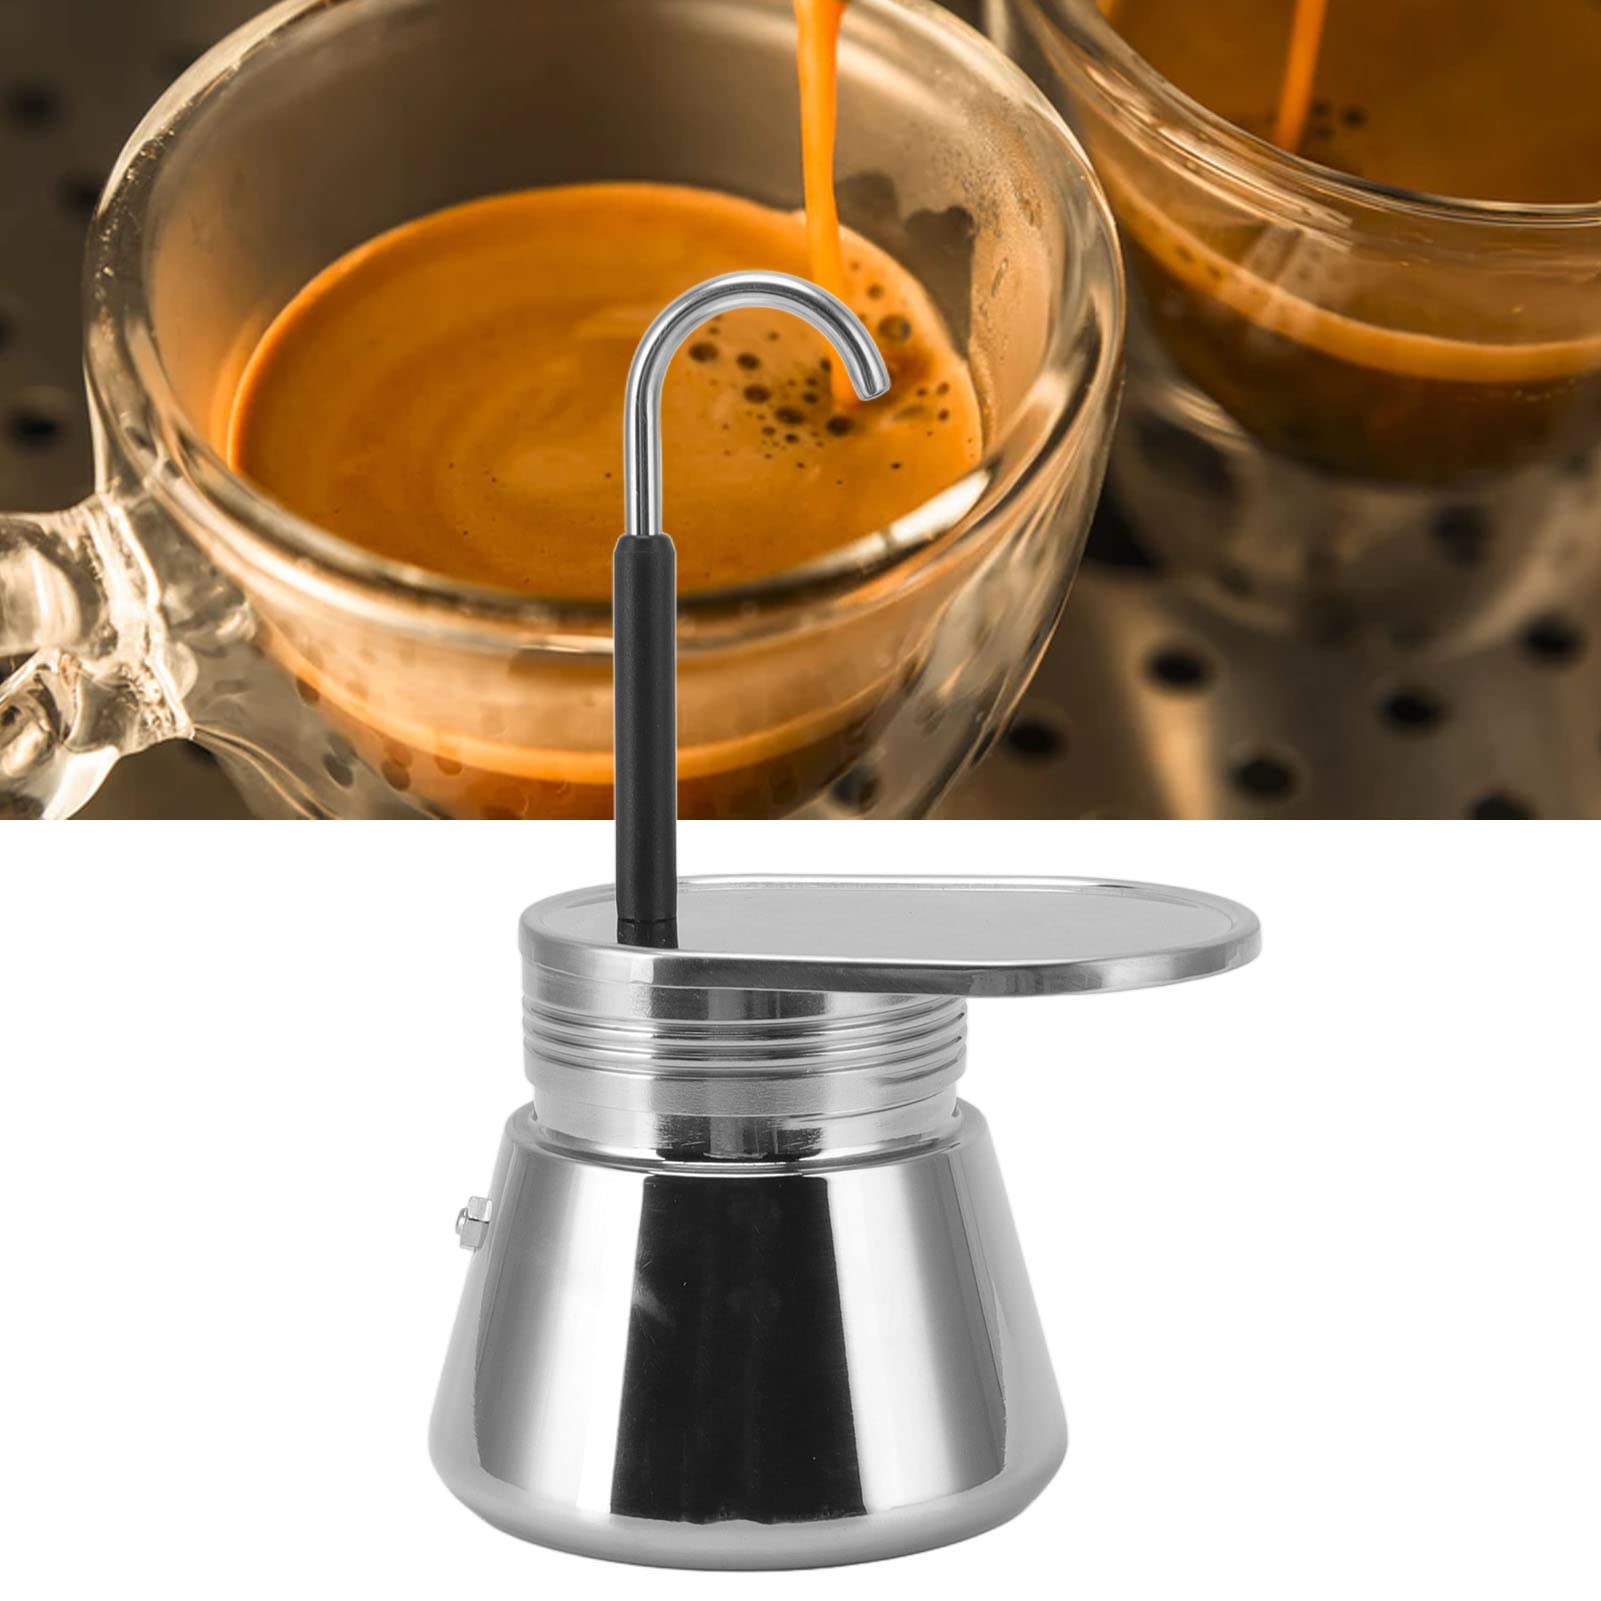 Espresso Maker, Single Spout Stovetop Moka Pot Stainless Steel Mini Stovetop Espresso Percolator Italian Type Espresso Cup Coffee Maker,Use on Stove at Home or Camping